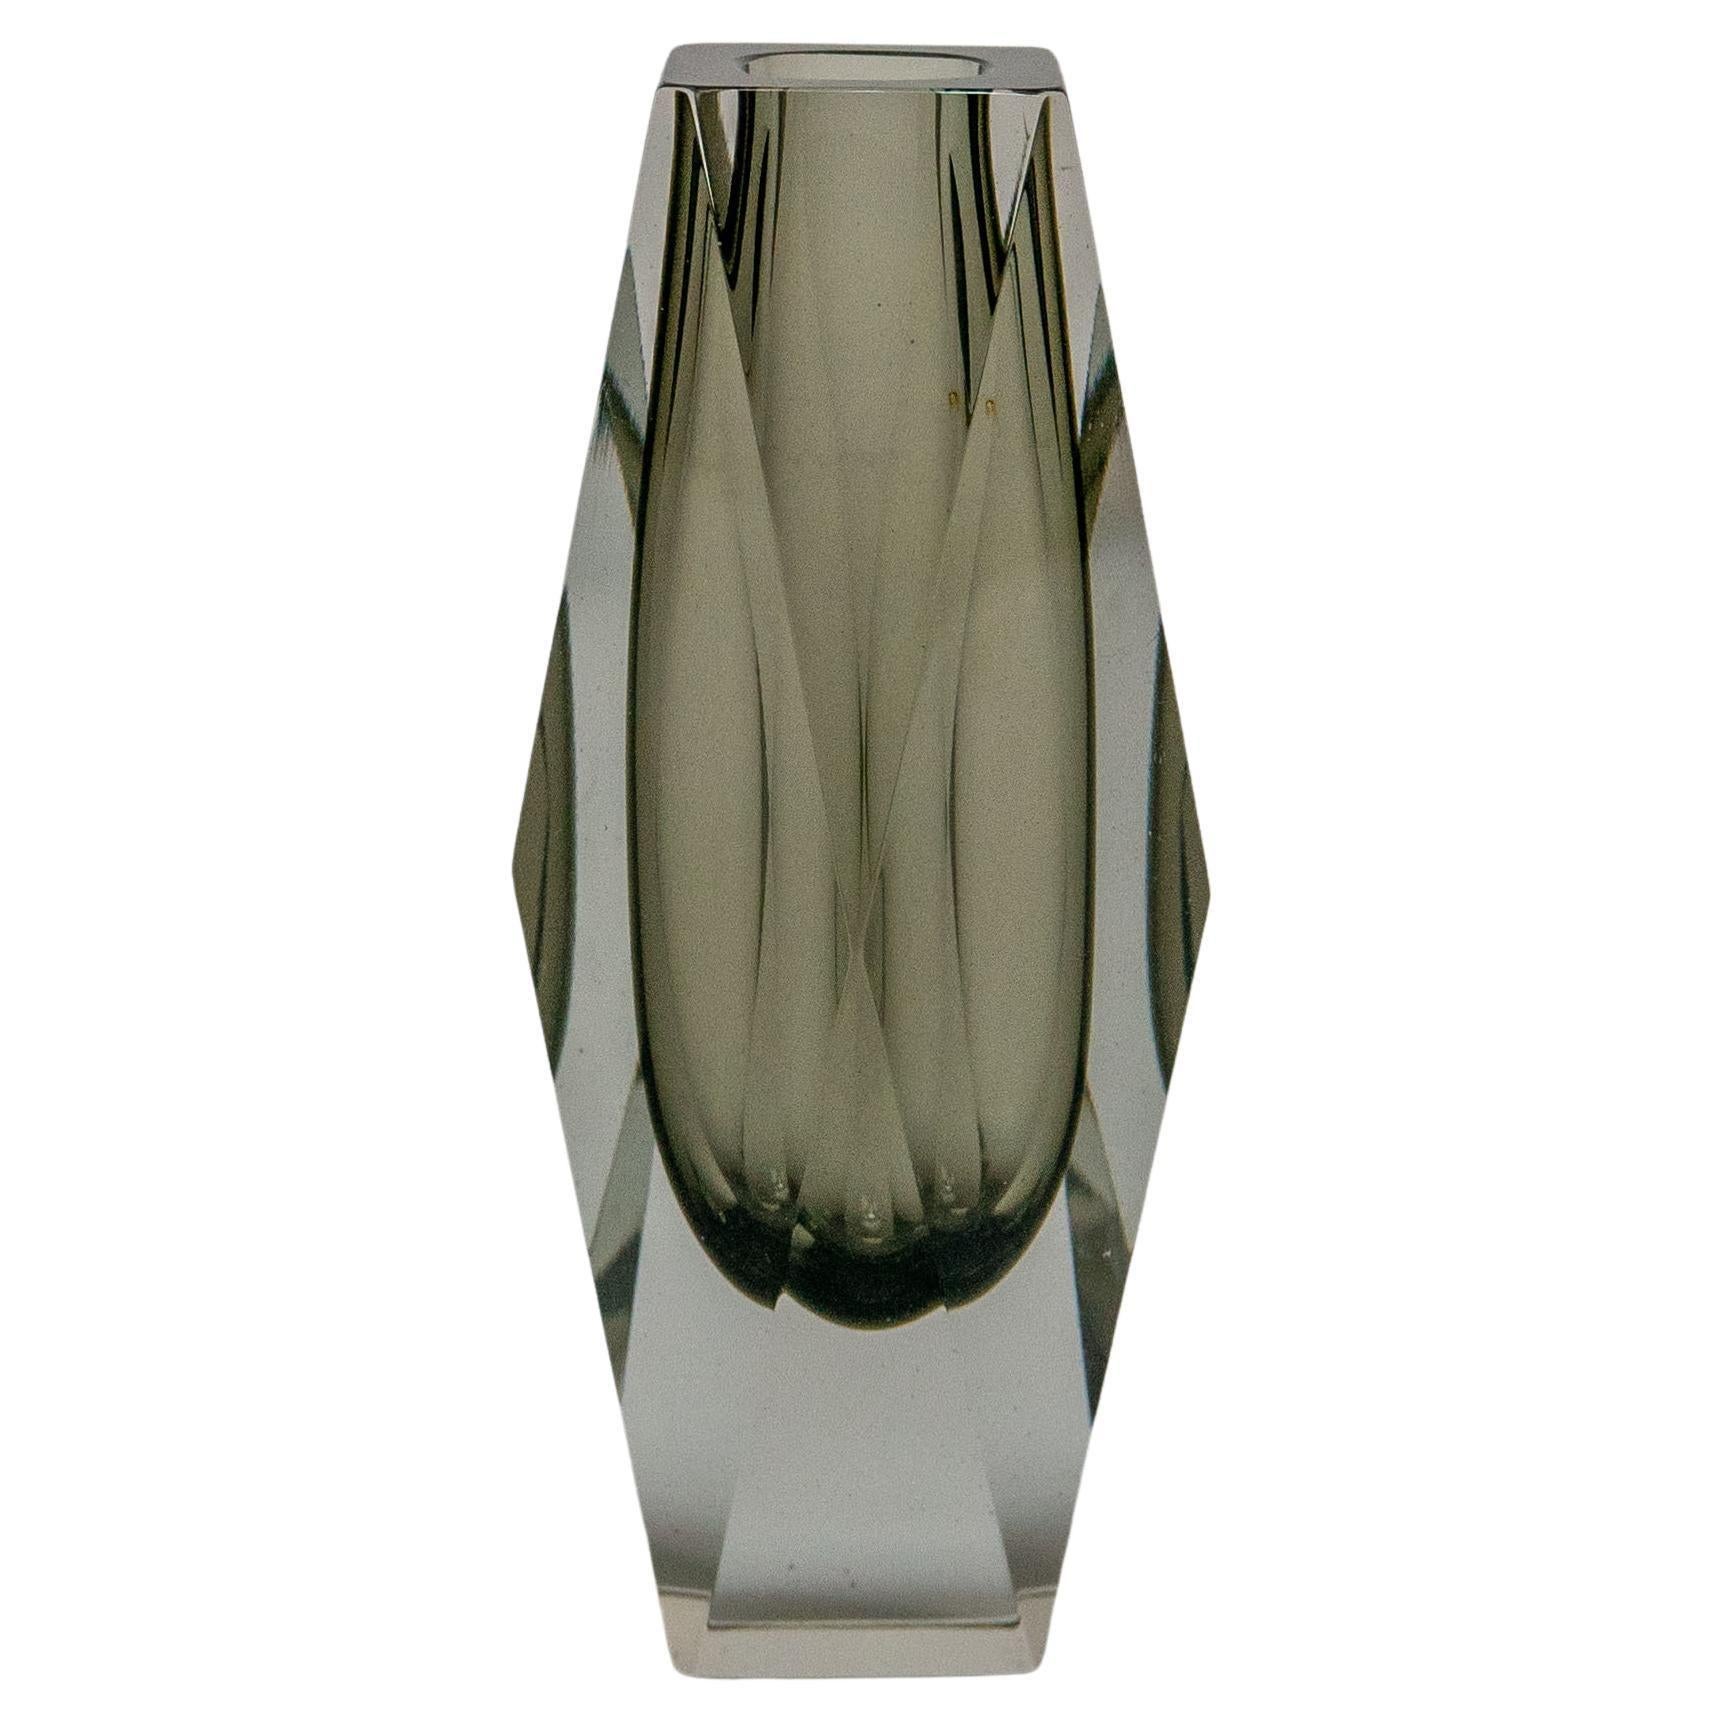 Vintage Italian Vase in Massive Grey "Sommerso" Murano Glass, Flavio Poli Style For Sale